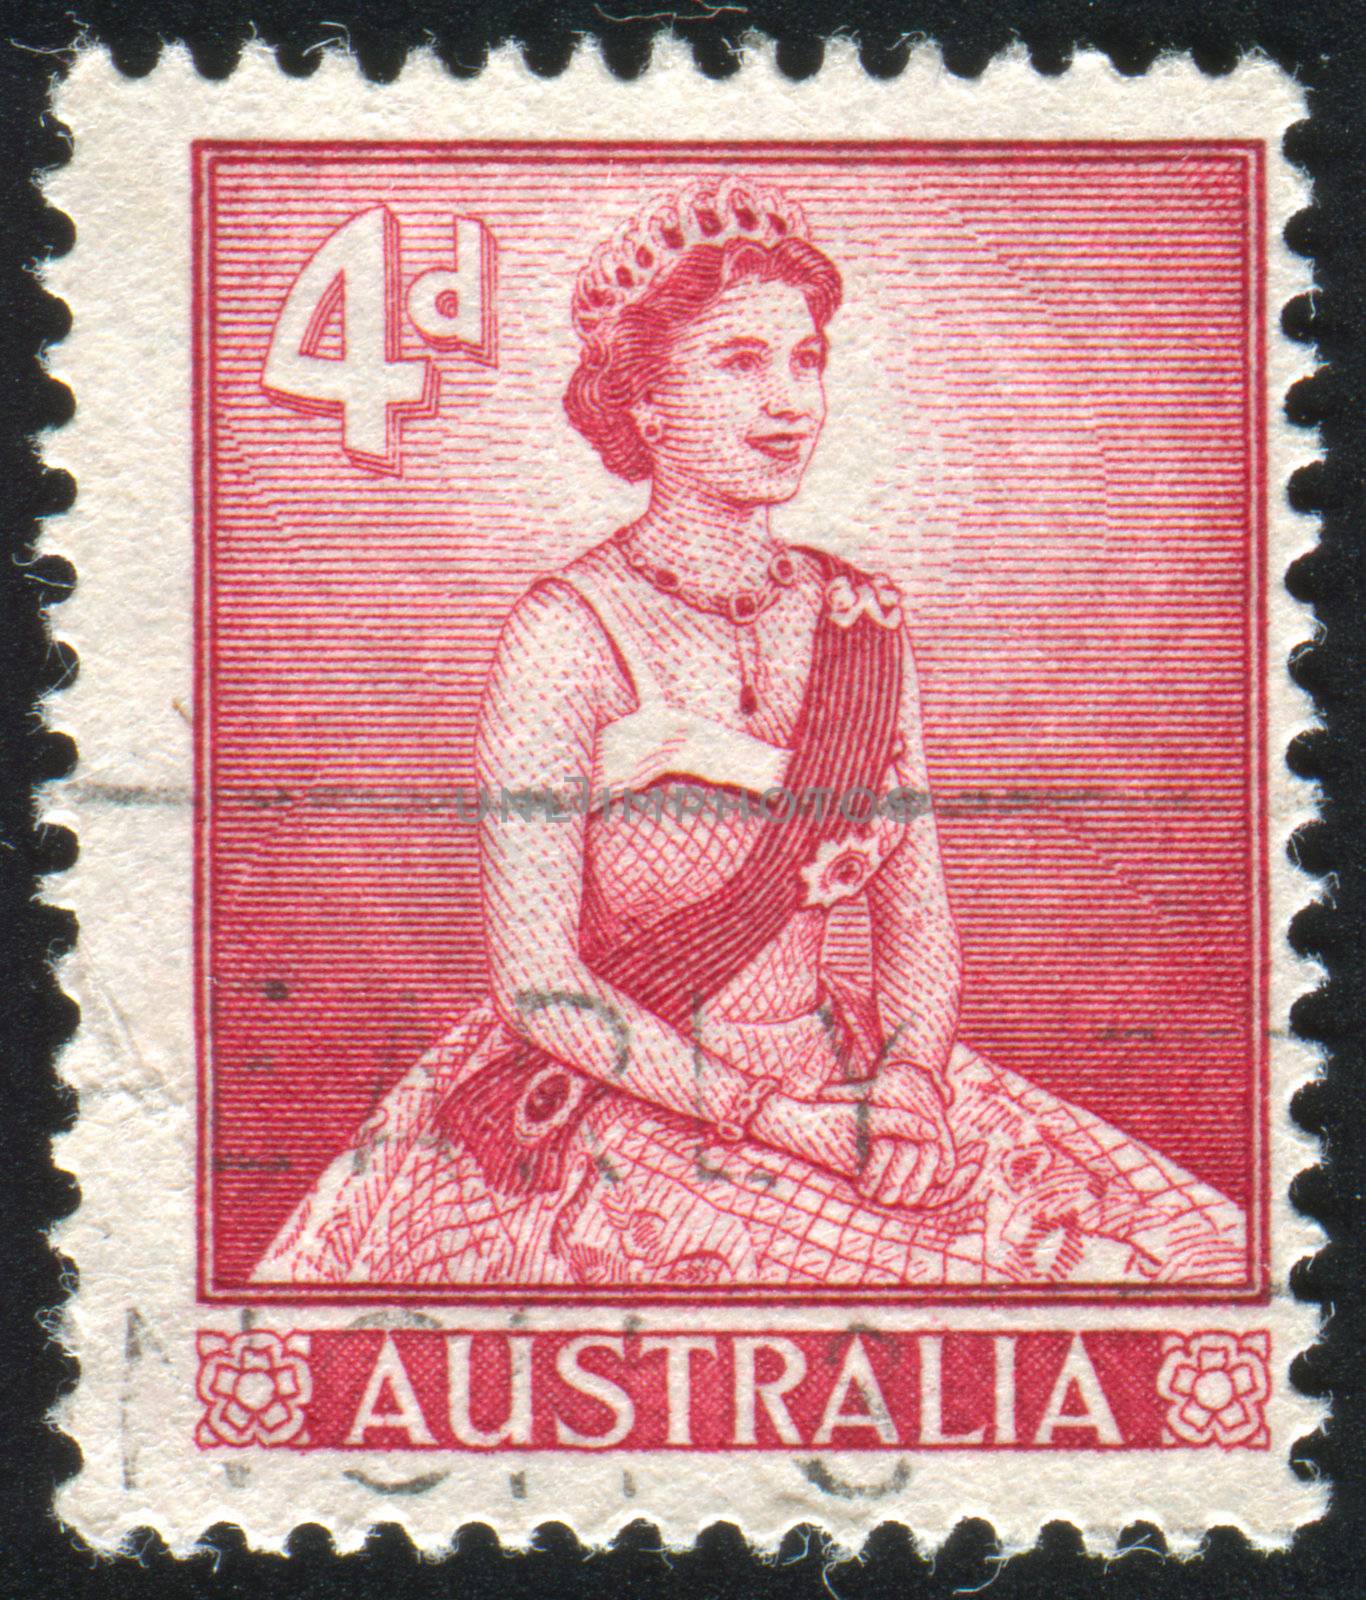 AUSTRALIA - CIRCA 1958: stamp printed by Australia, shows Queen Elizabeth, circa 1958